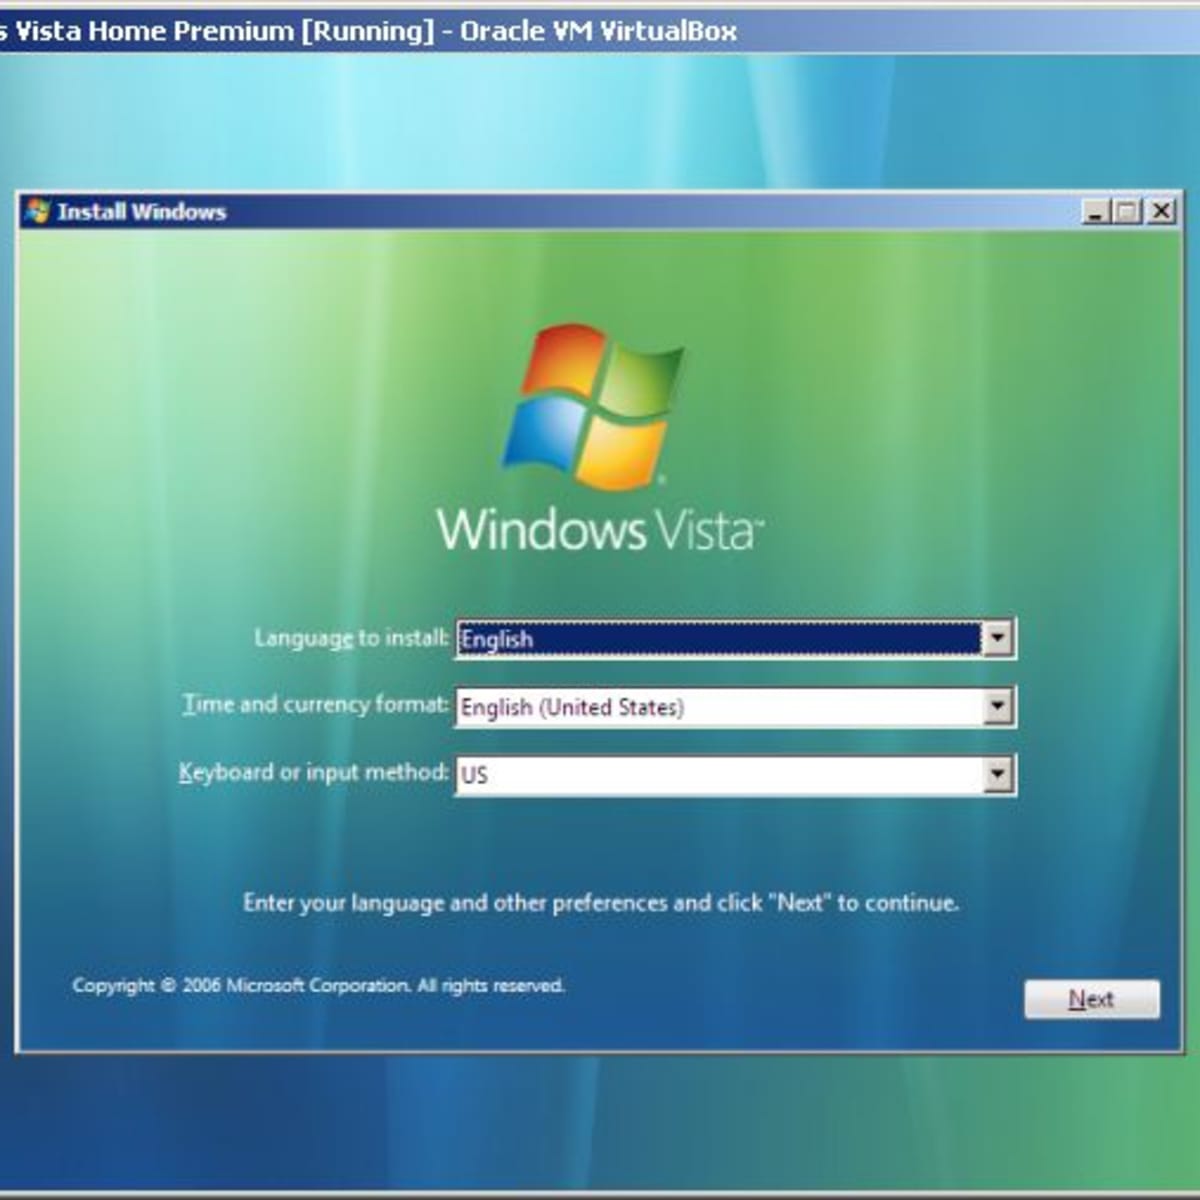 instal the new version for windows DesktopSnowOK 6.24